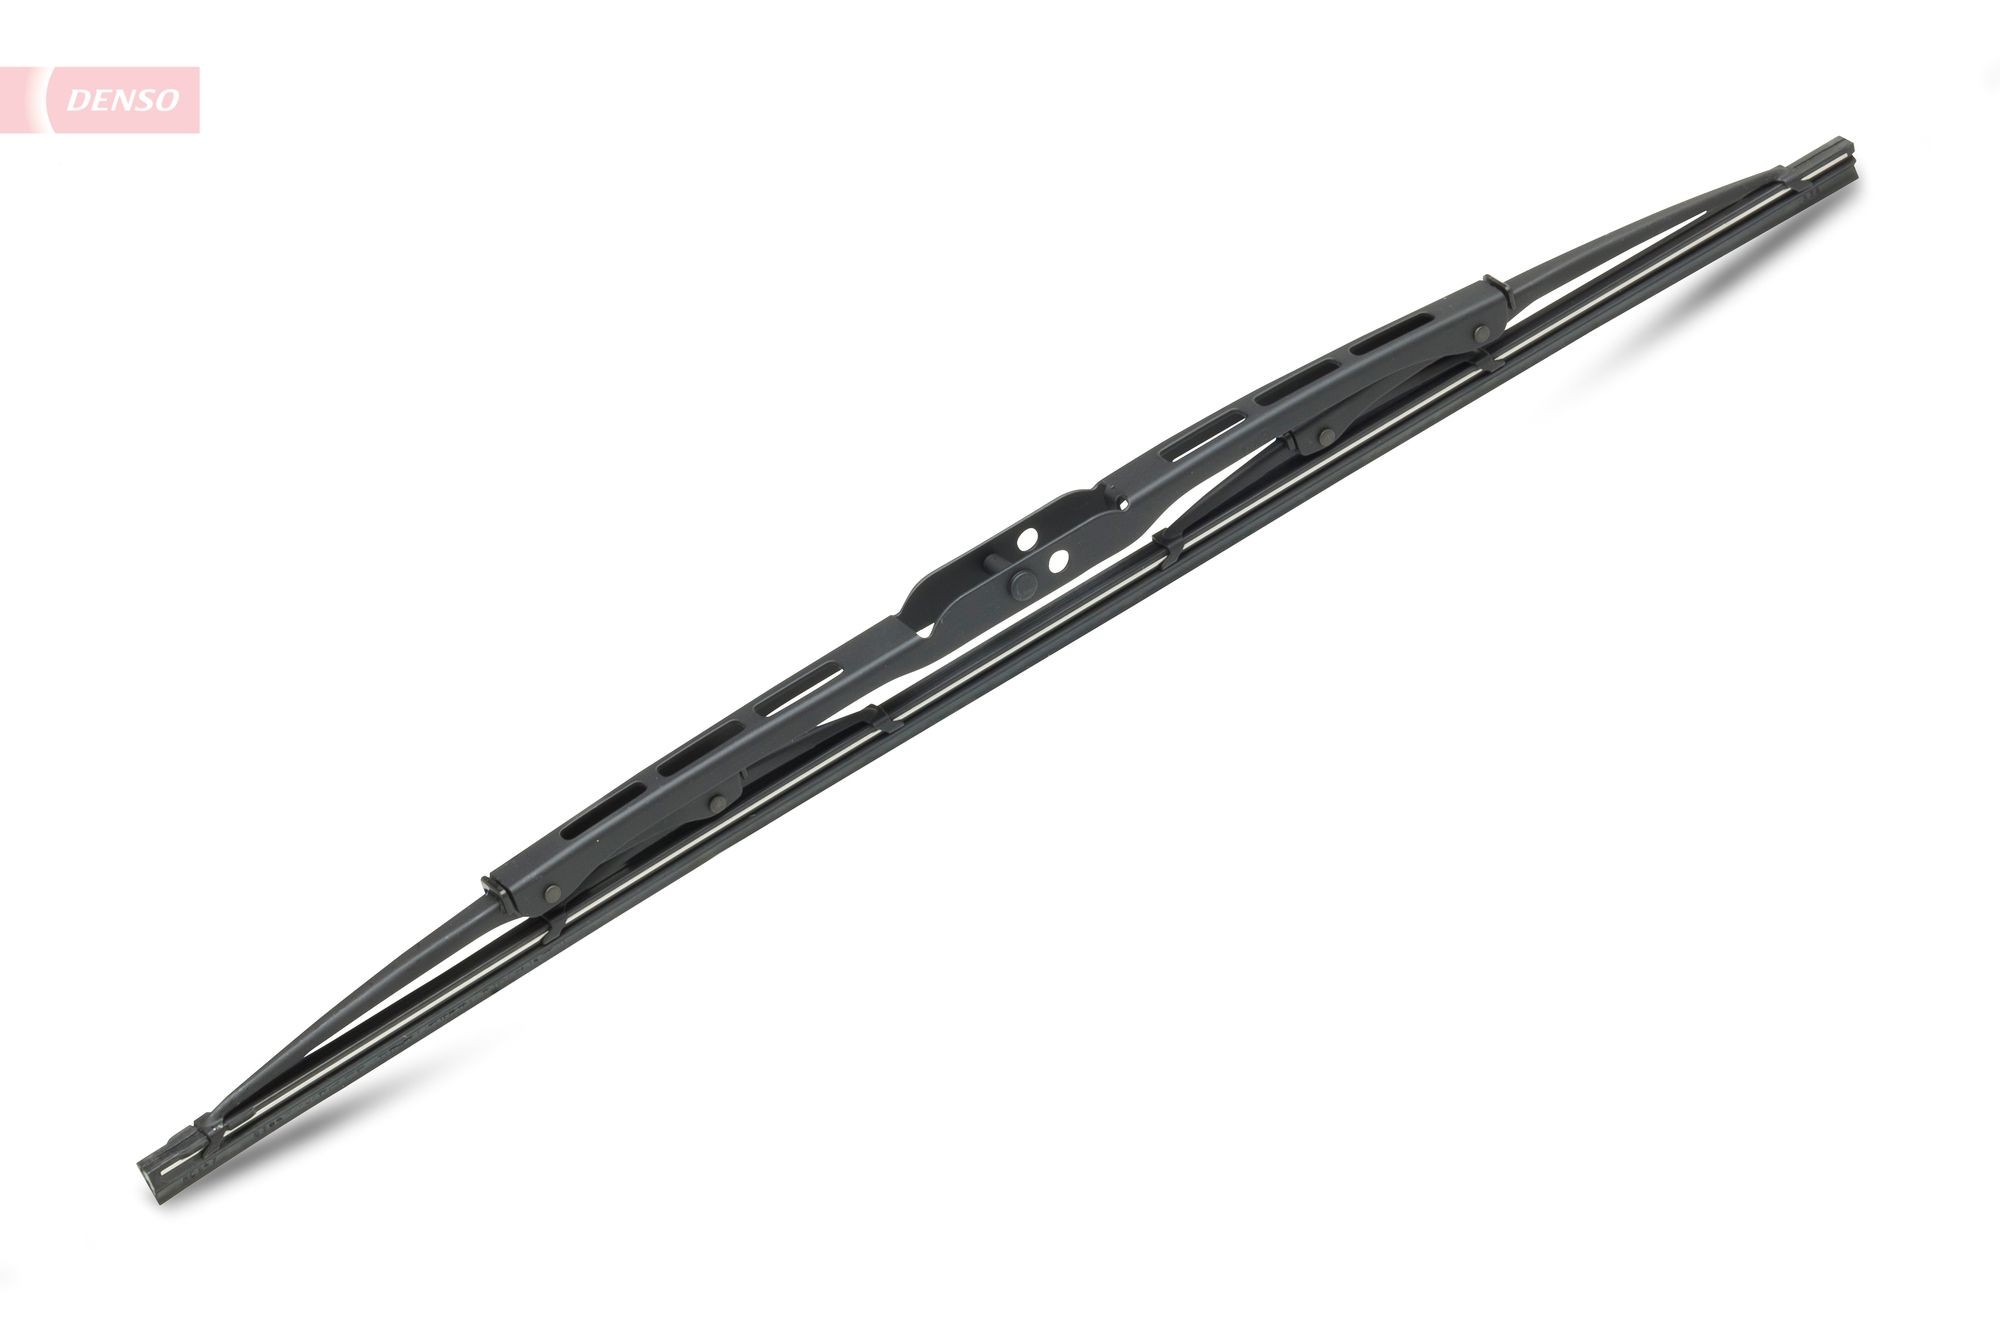 DENSO DM-045 Wiper blade SKODA experience and price